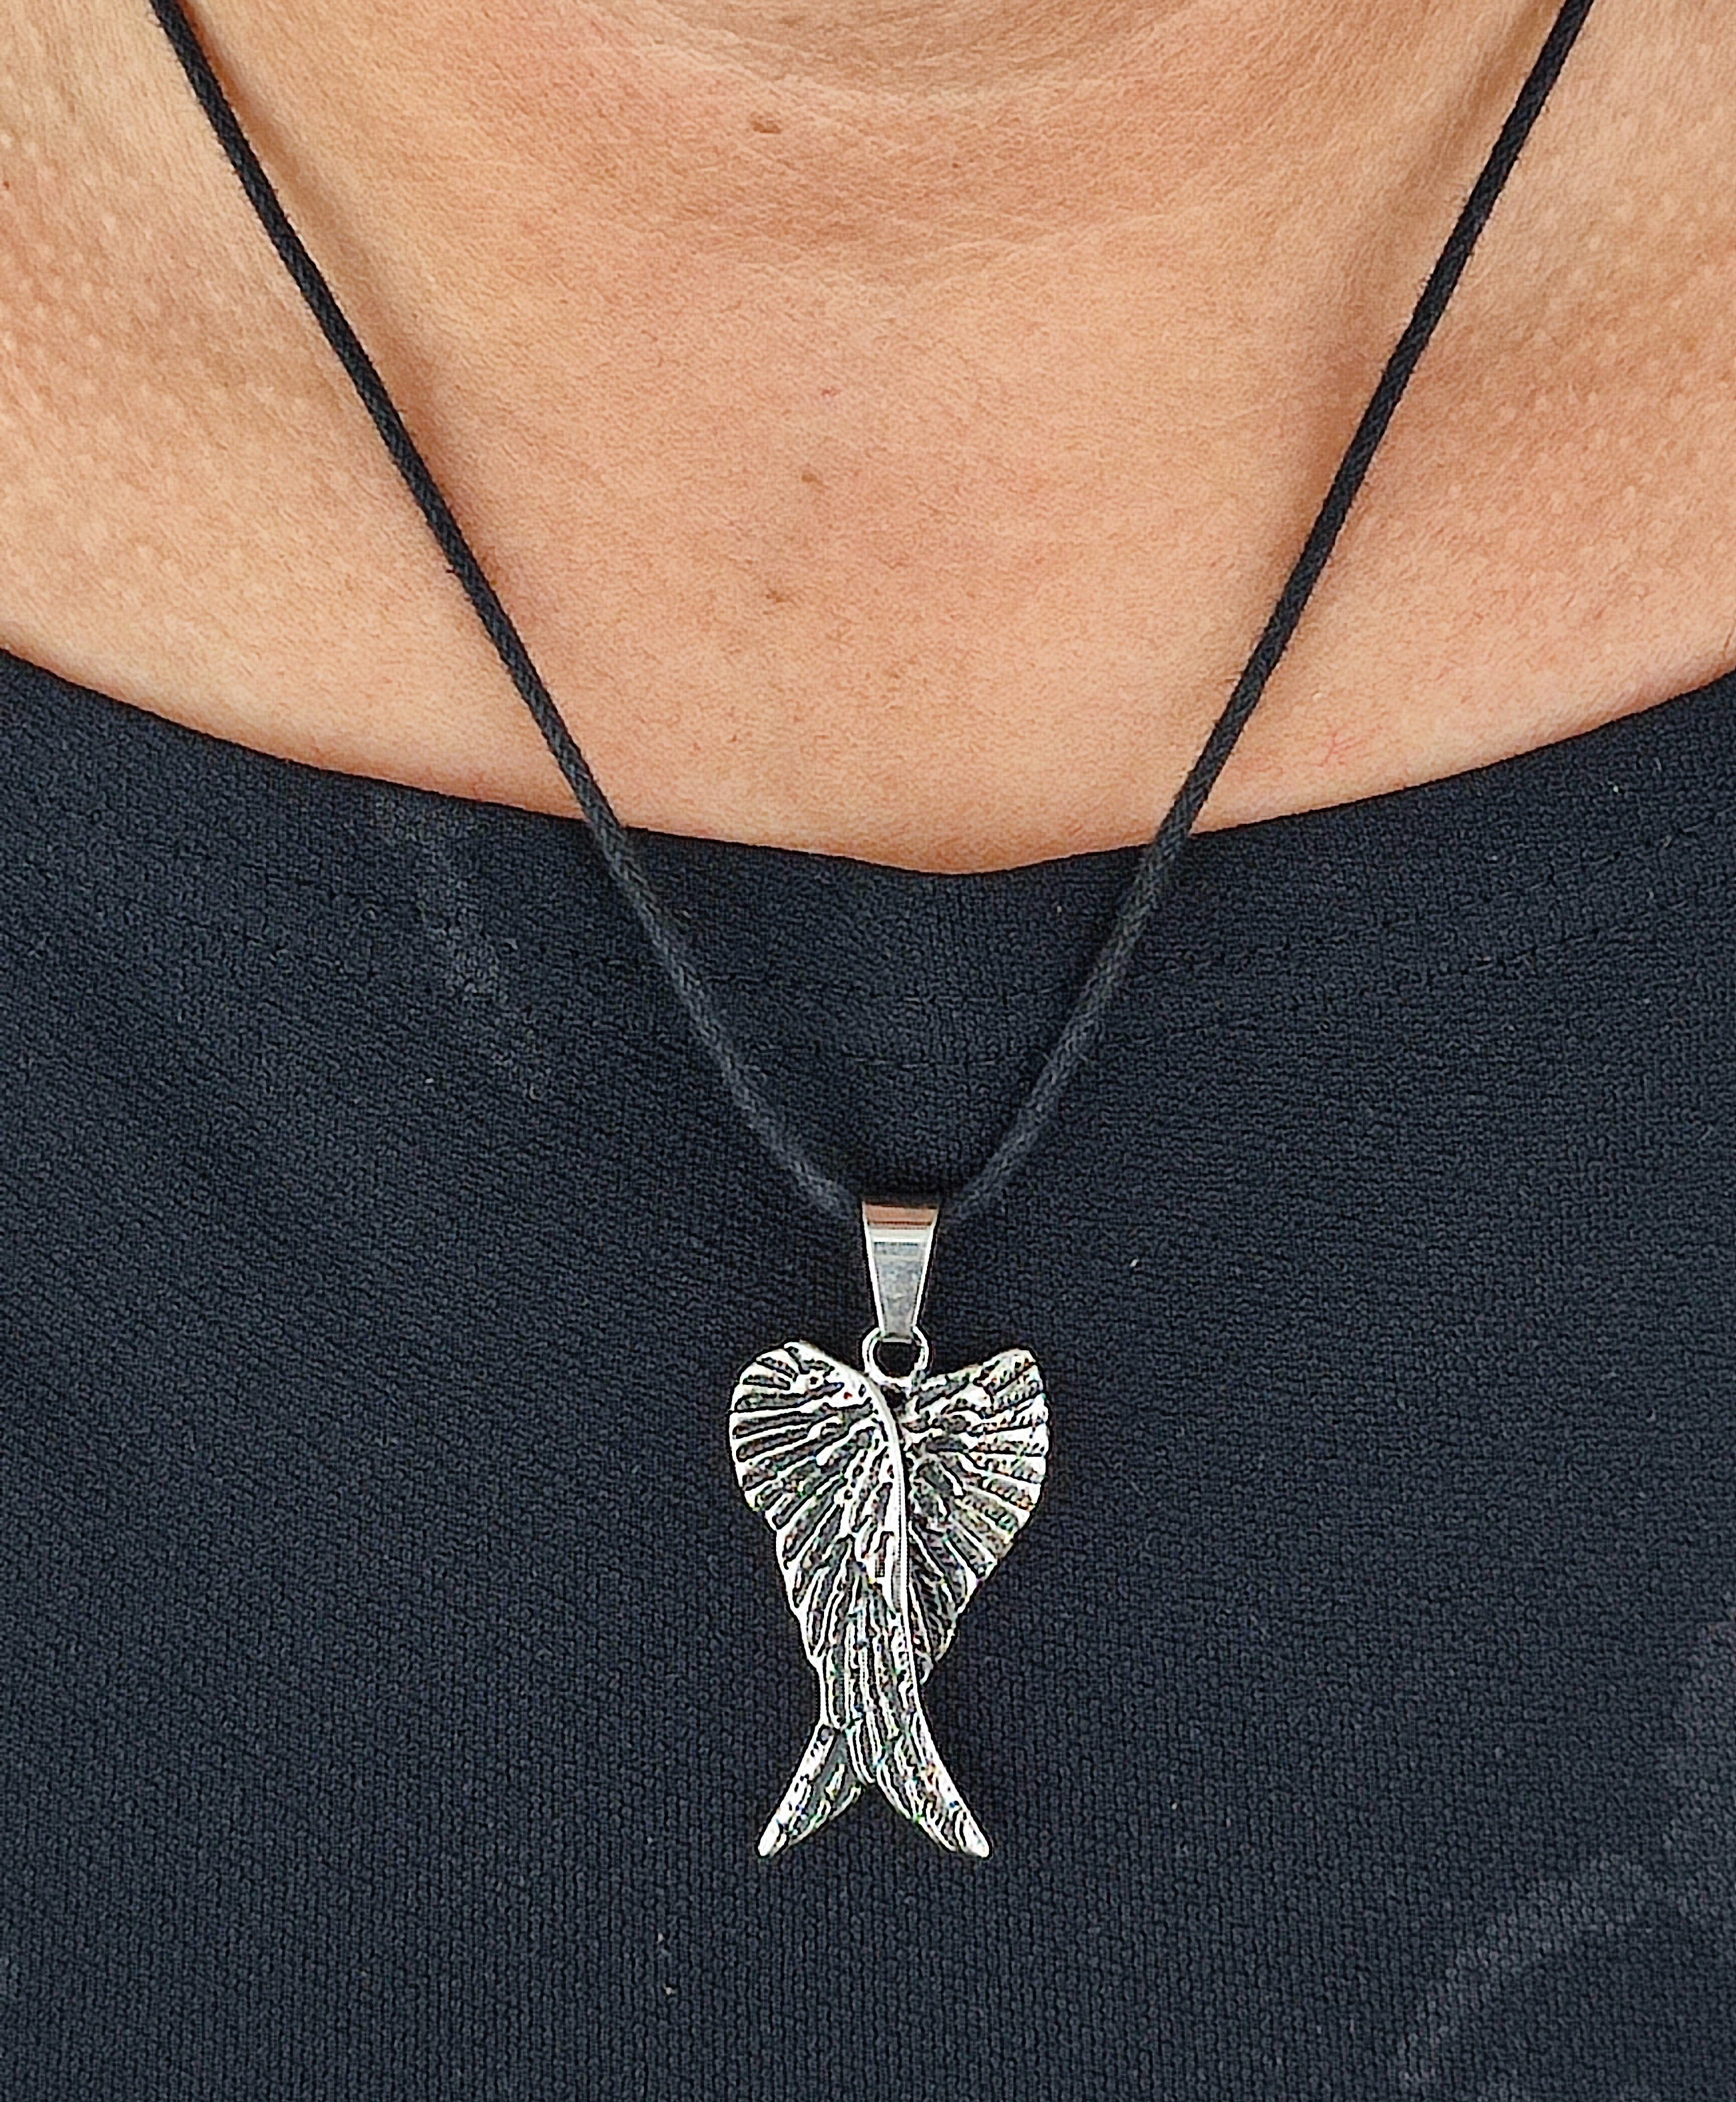 Flügel Engel of Engelsflügel Engels Leather Kiss Edelstahl Schutzengel Flügel Kettenanhänger